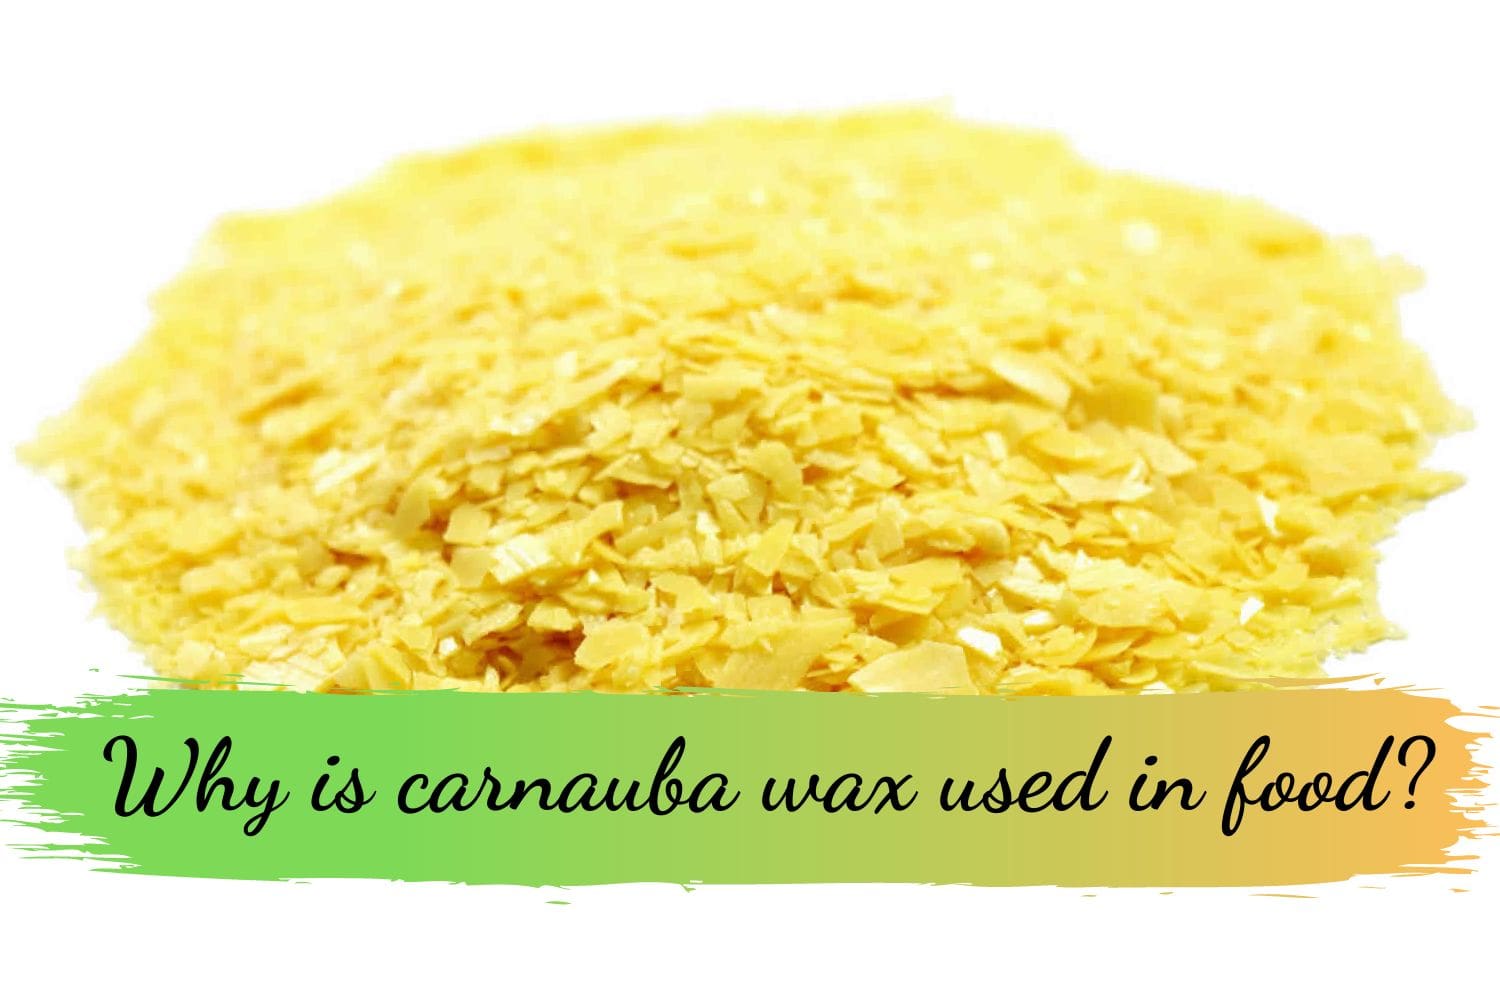 Why is carnauba wax used in food